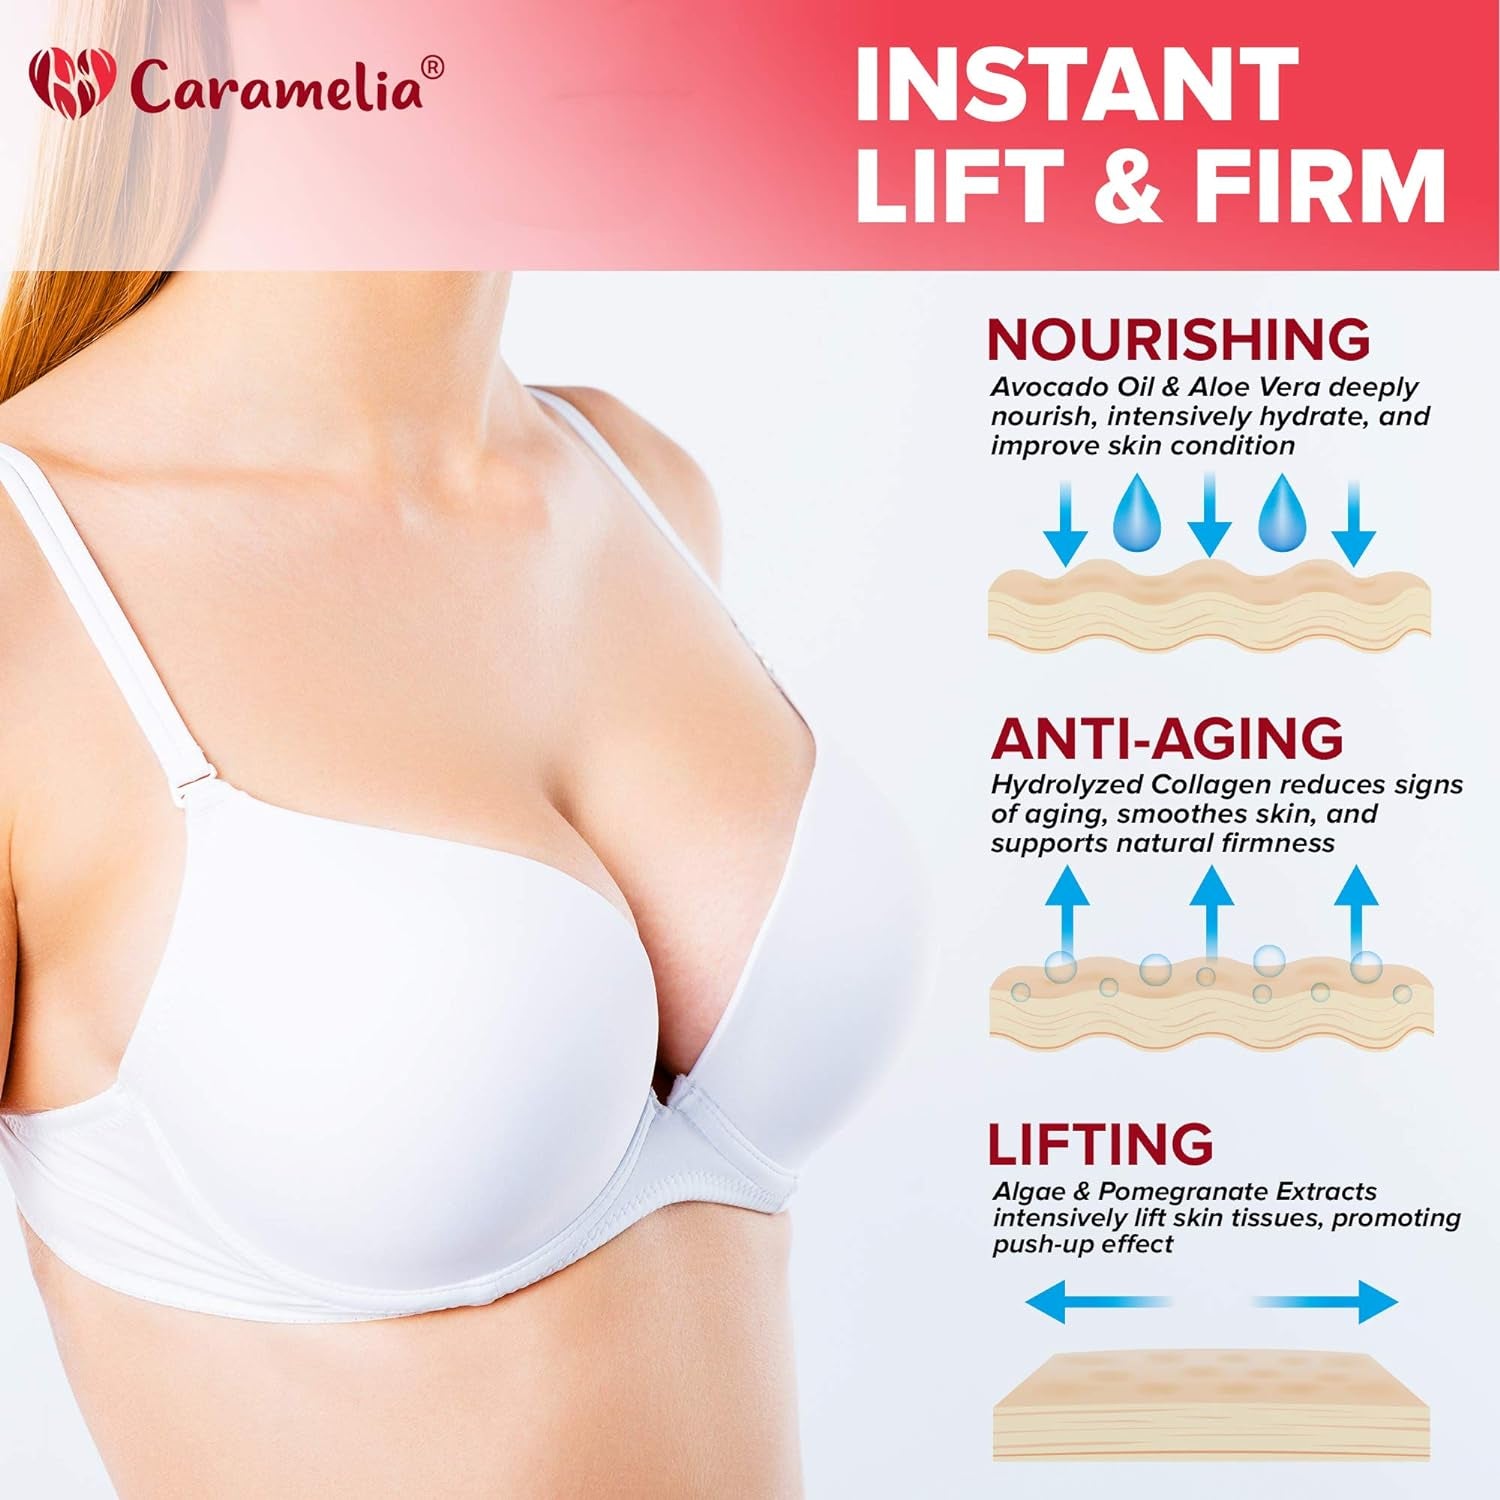 Breast Enhancement Cream for Women- Saggy Breast Lift Cream - Made in USA - Breast Enhancement Cream - Breast Firming and Lifting Cream for Saggy Breast - Breast Growth Cream for Firmer Breast (Red)